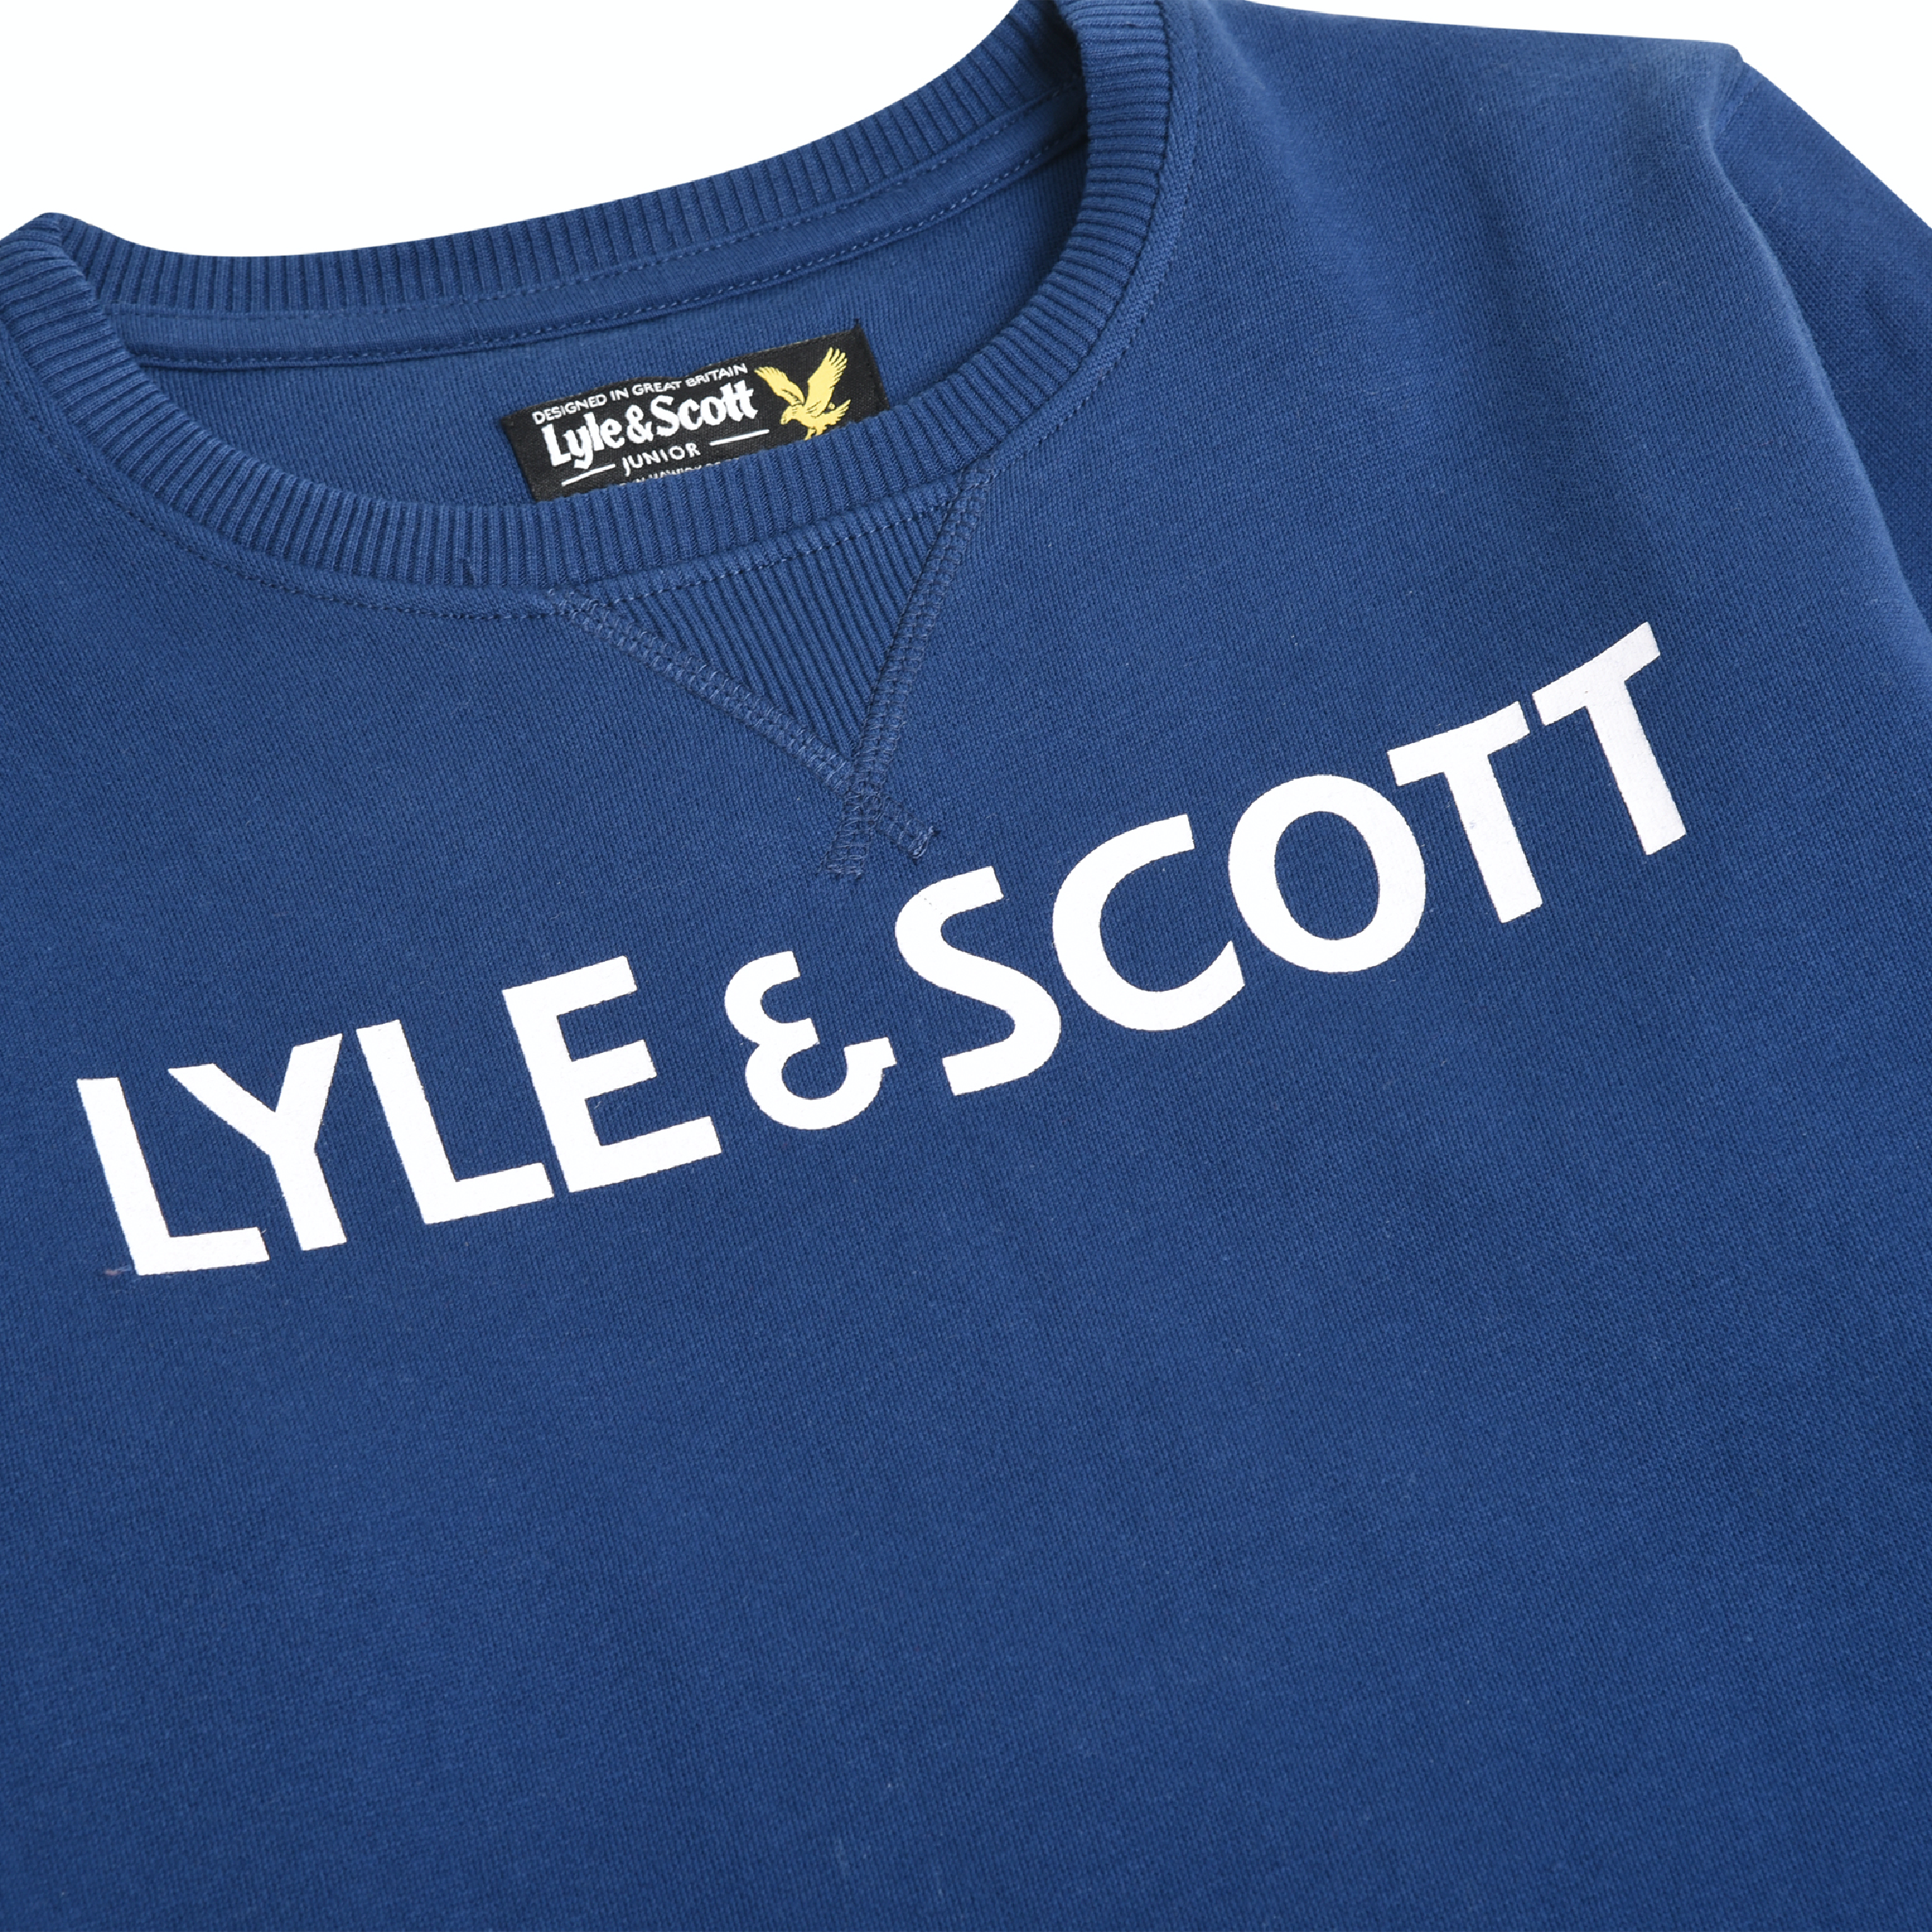 Jongens Lyle & Scott Text BB Crew Sweat Estate Blue van Lyle & Scott in de kleur Estate Blue in maat 170-176.